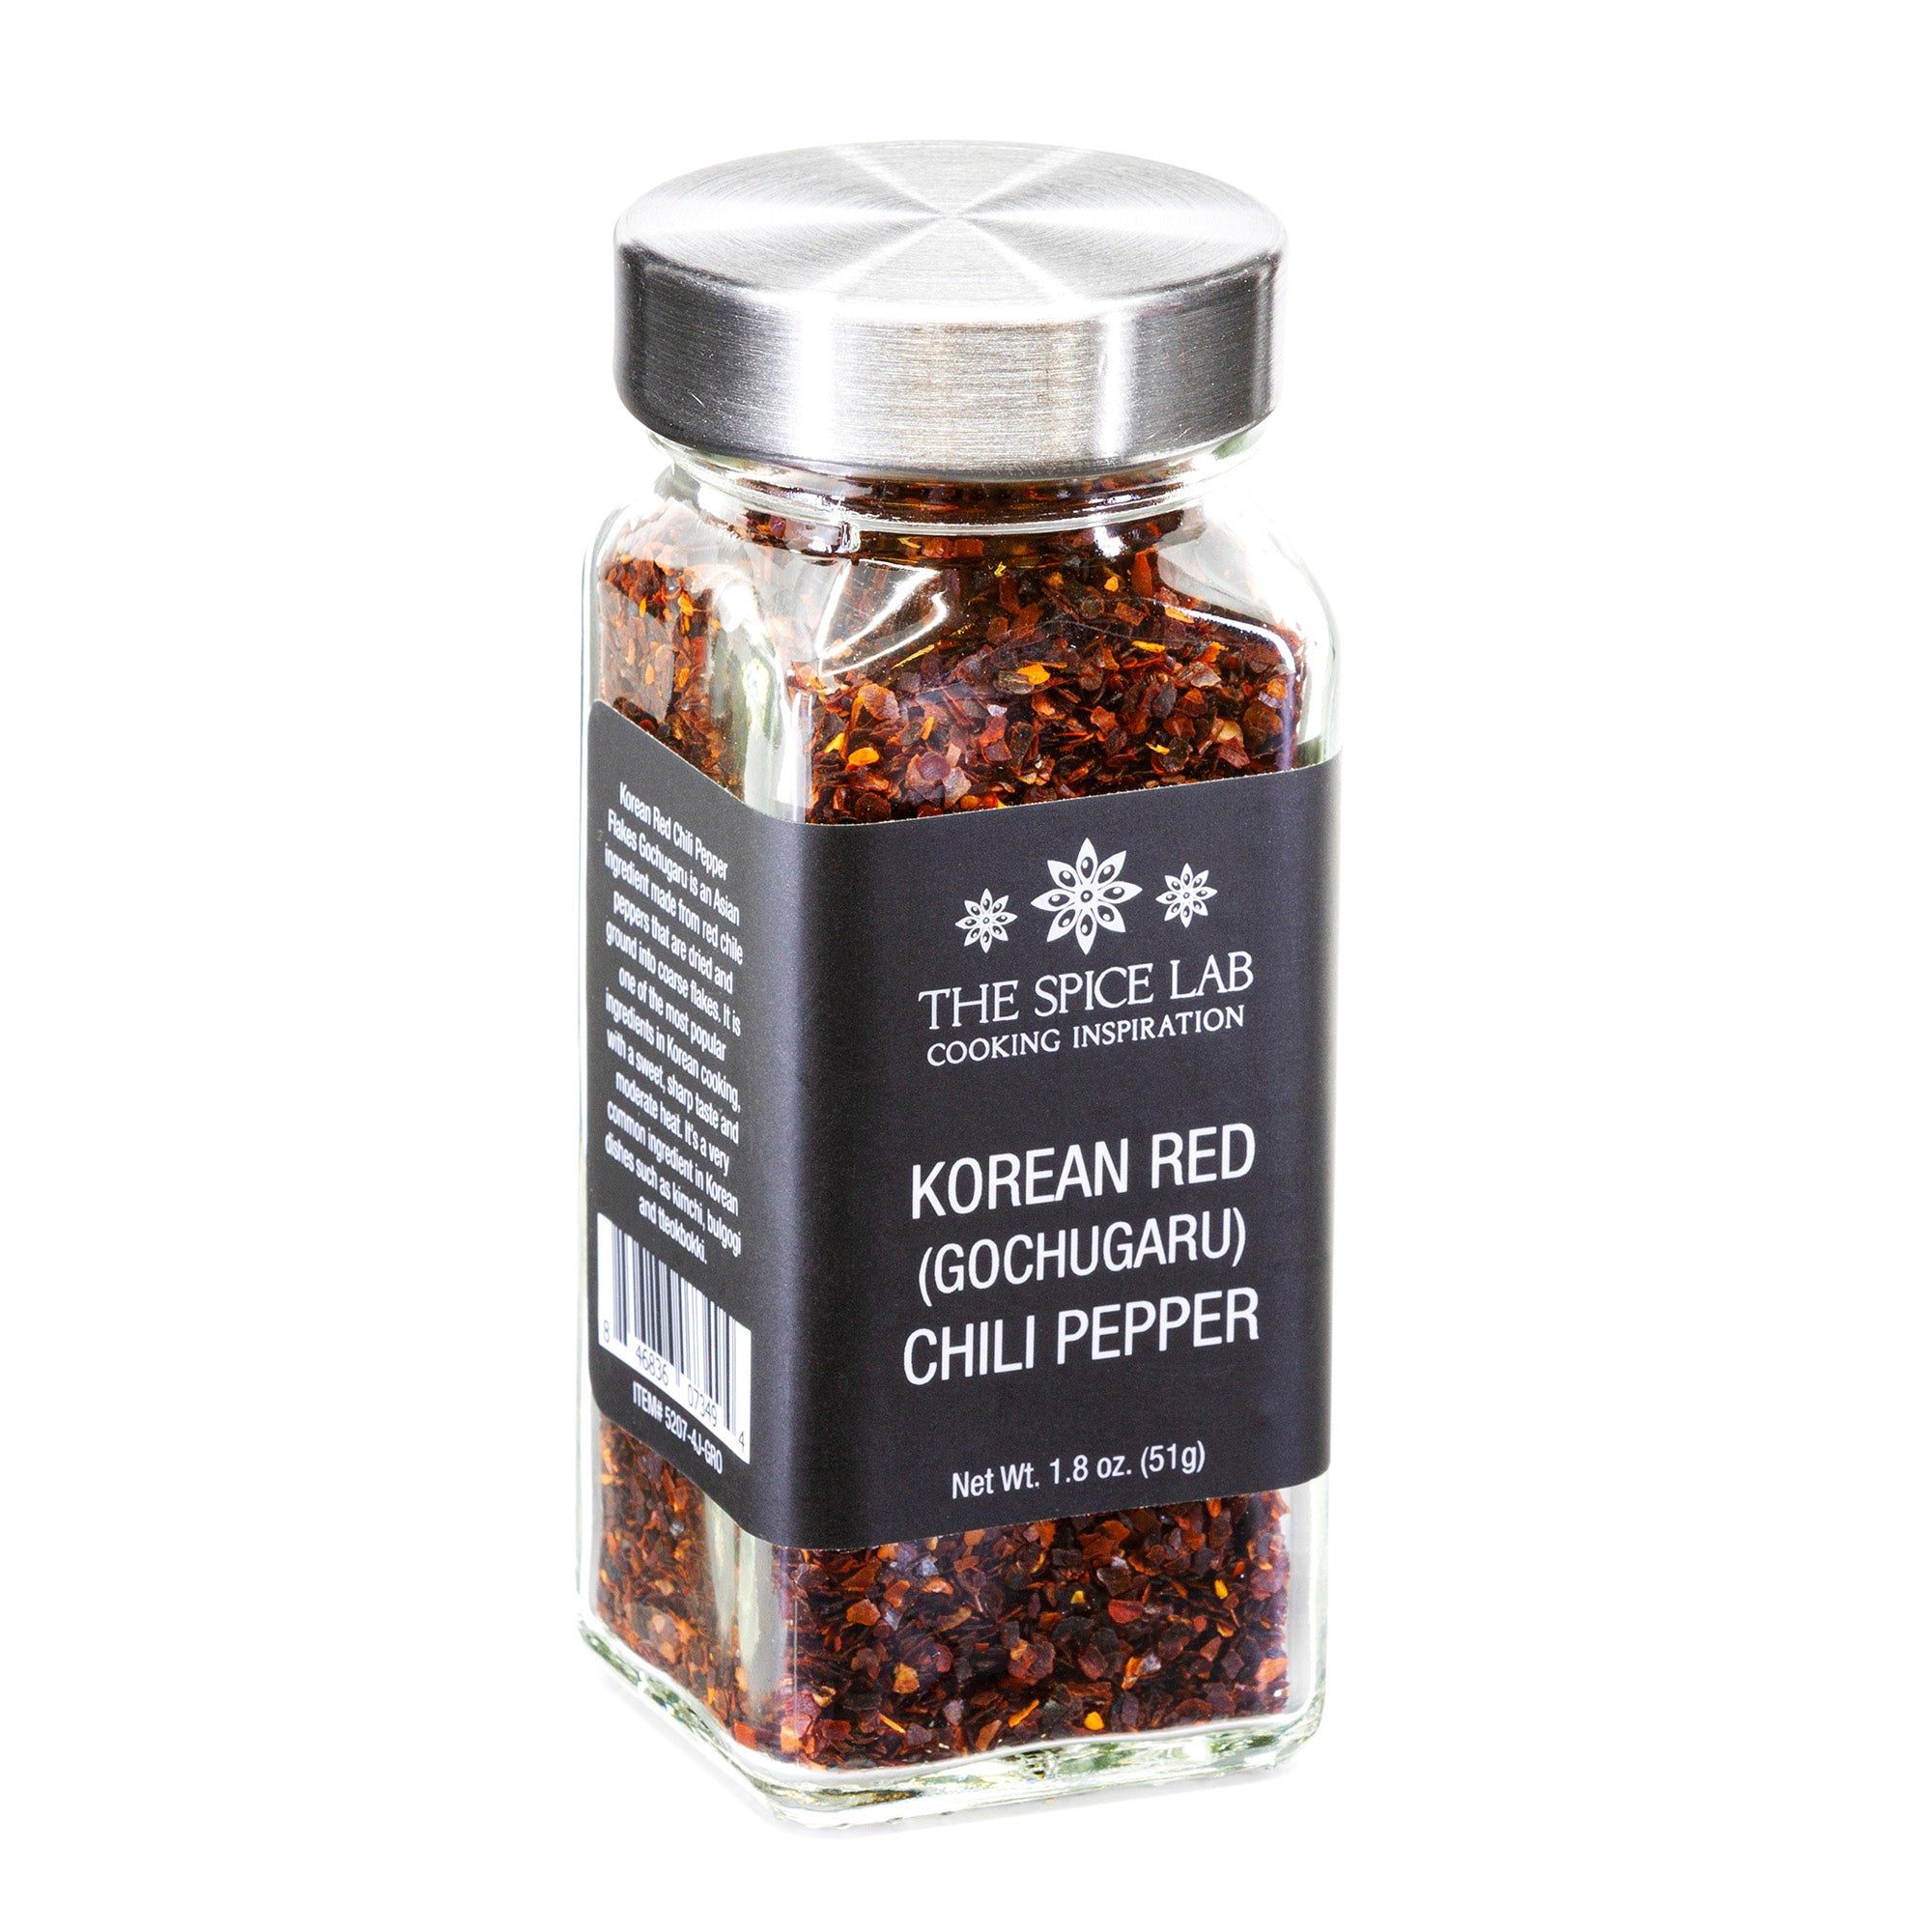 The Spice Lab Korean Red Chili Pepper Flakes (Gochugaru) Kosher Gluten